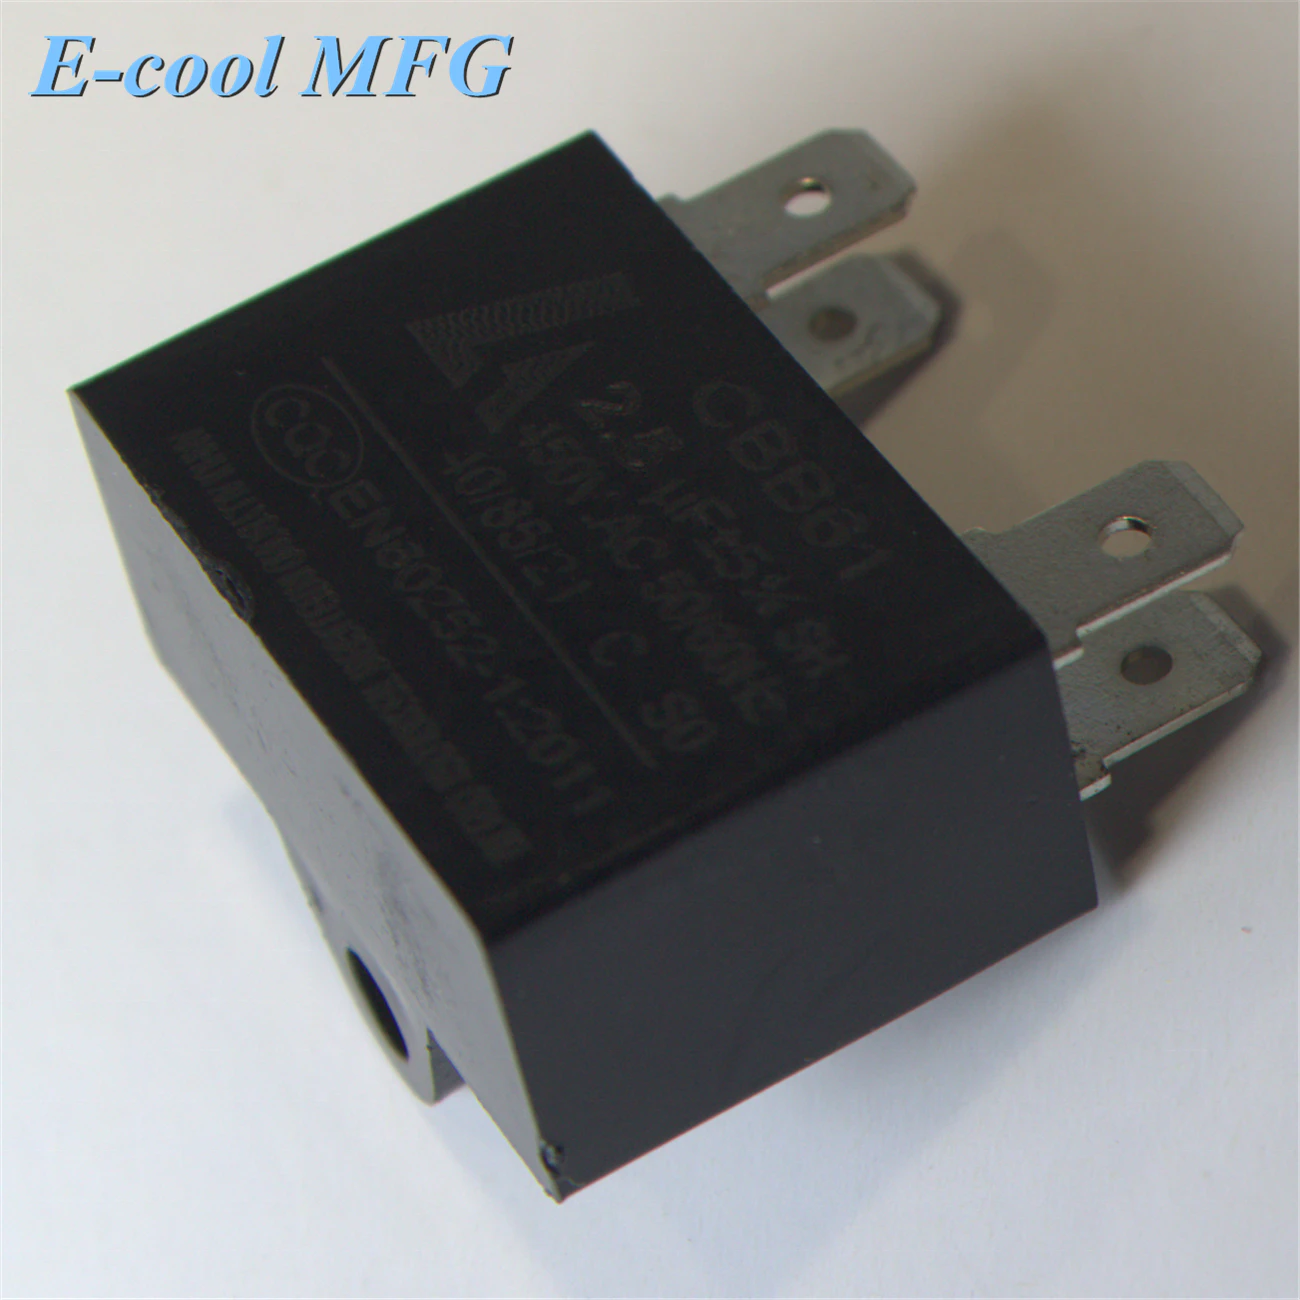 Fan use CBB612.5uf Start &Run capacitor cbb61 sh kondensator